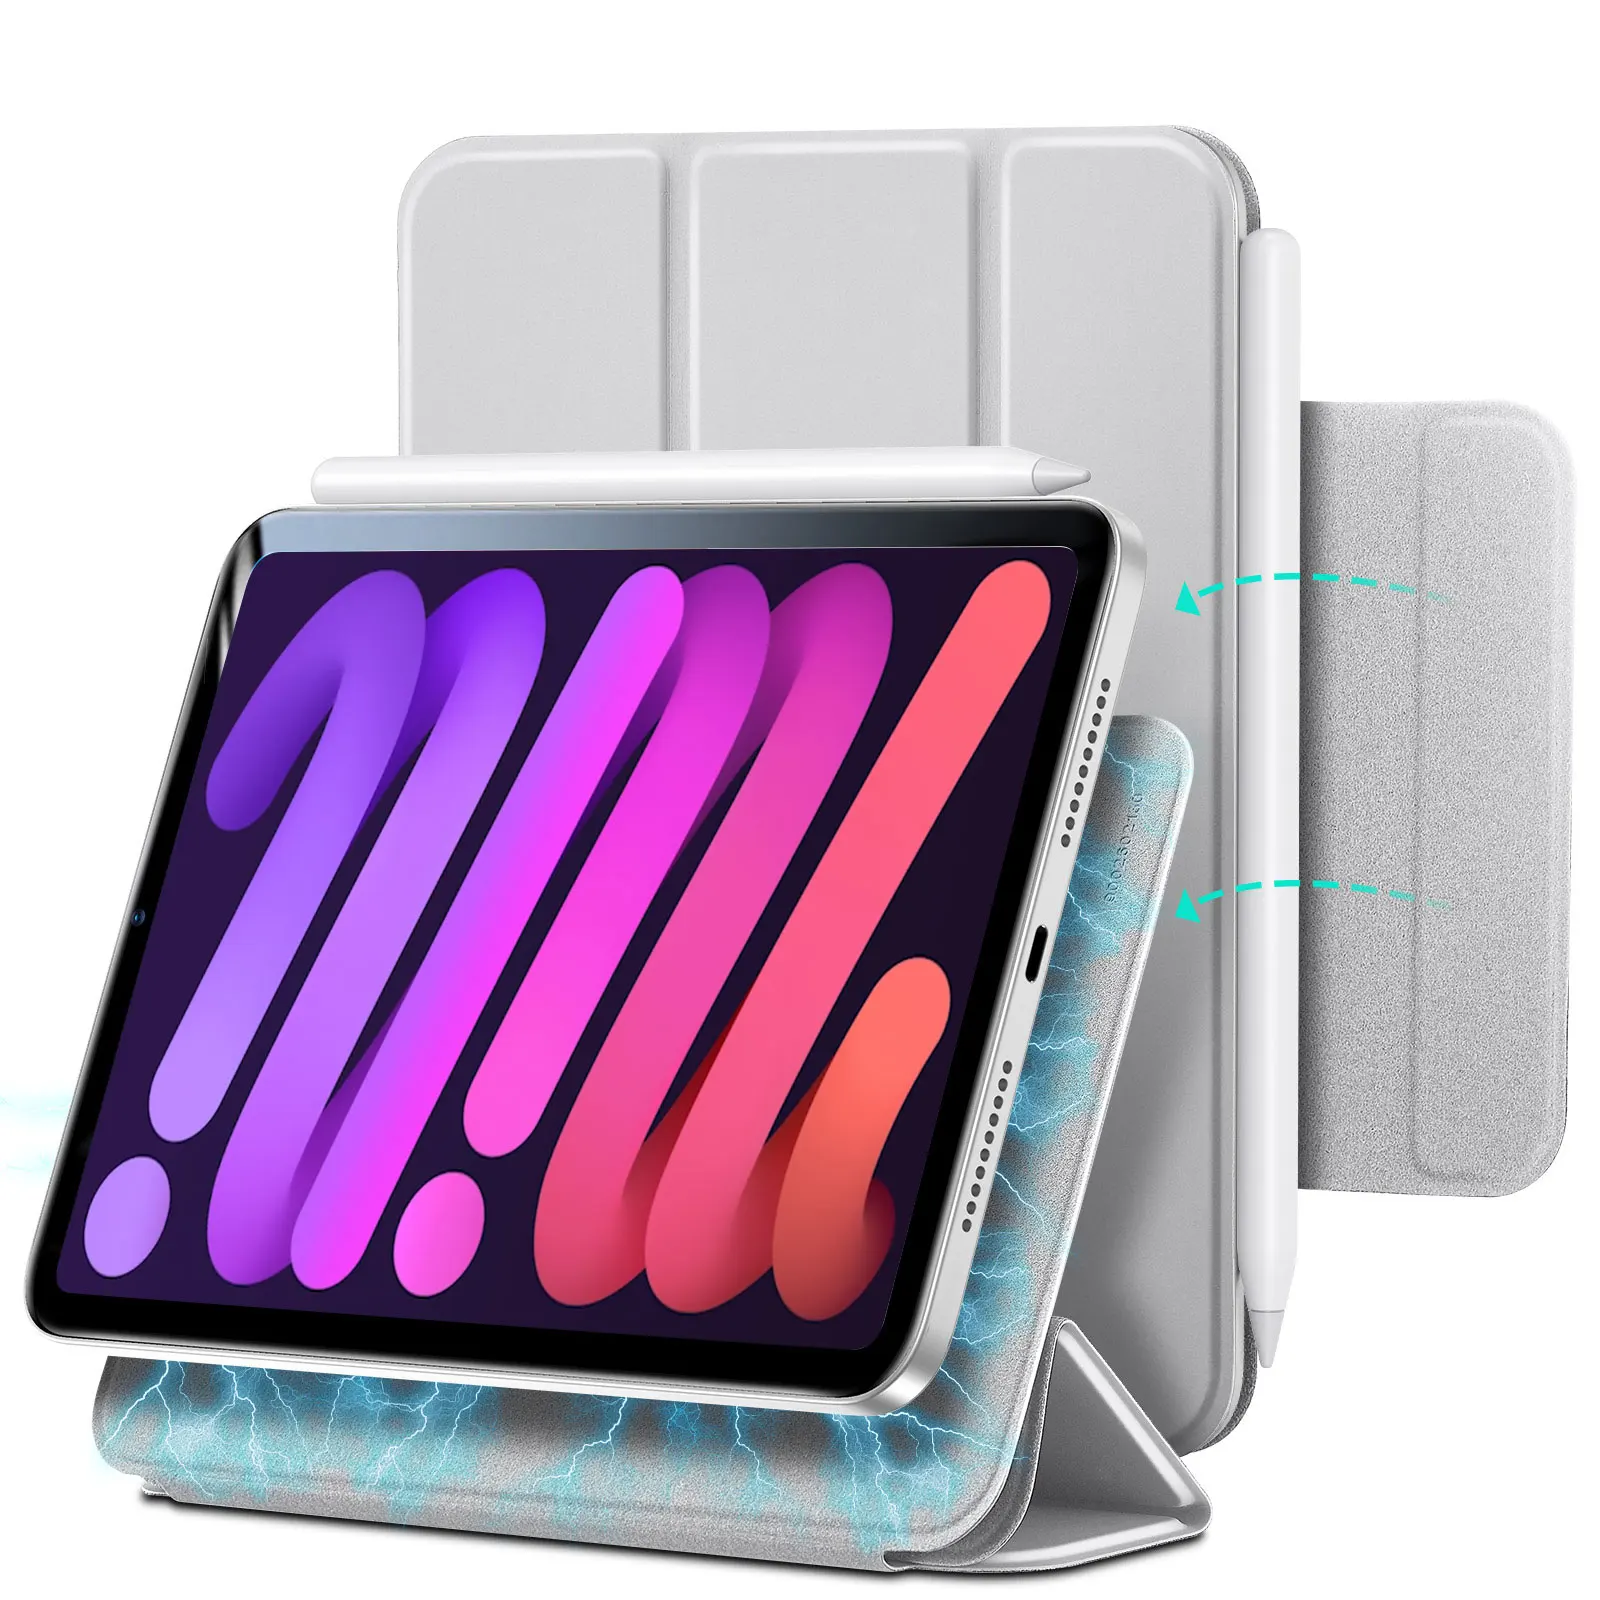 ESR for iPad mini 6 Case for iPad Pro 11 Case 2021 Magnetic